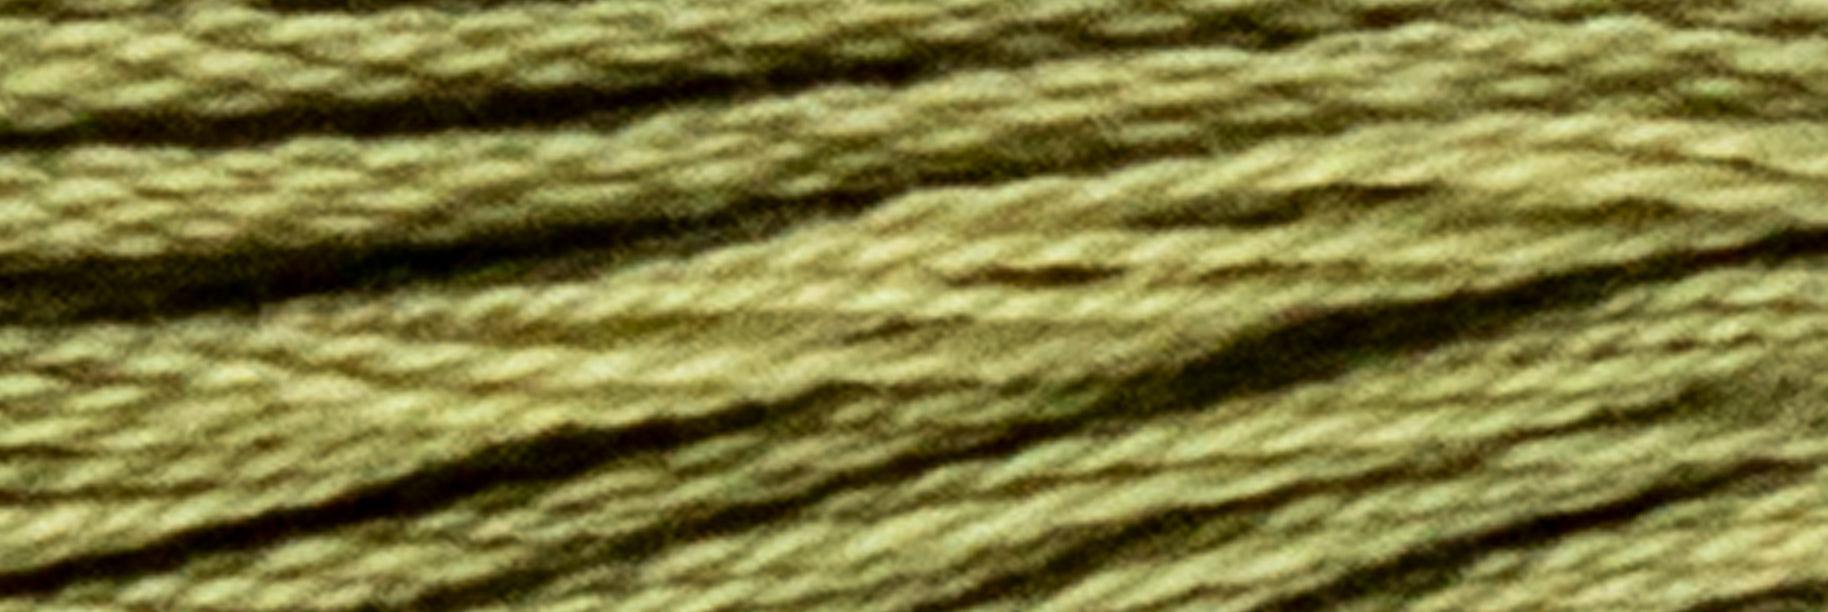 Stranded Cotton Luca-S - 304 / DMC 3052 / Anchor 860 - Luca-S Stranded Cotton